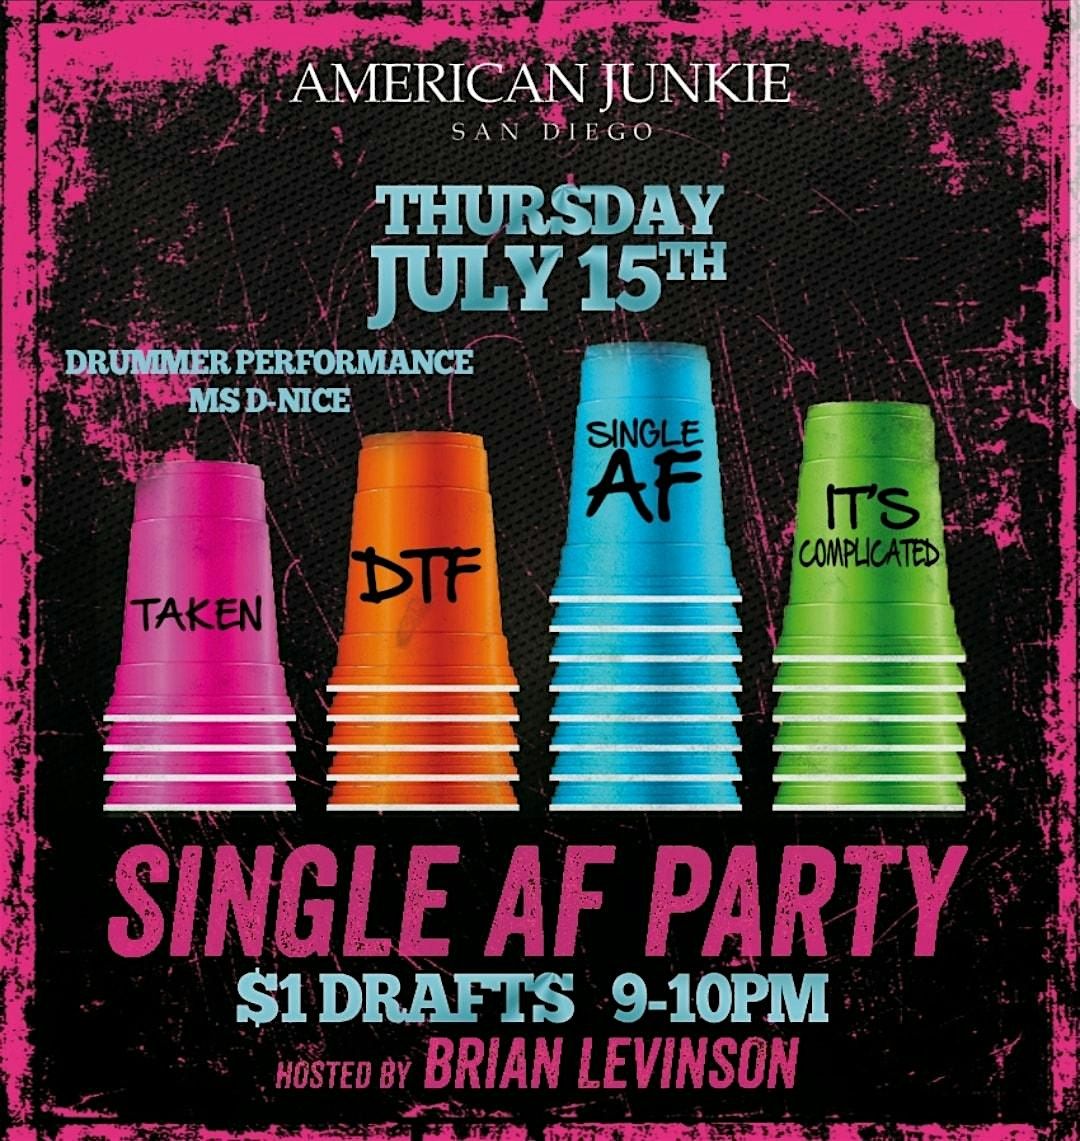 Levinson Group Presents: Single AF Party - American Junkie